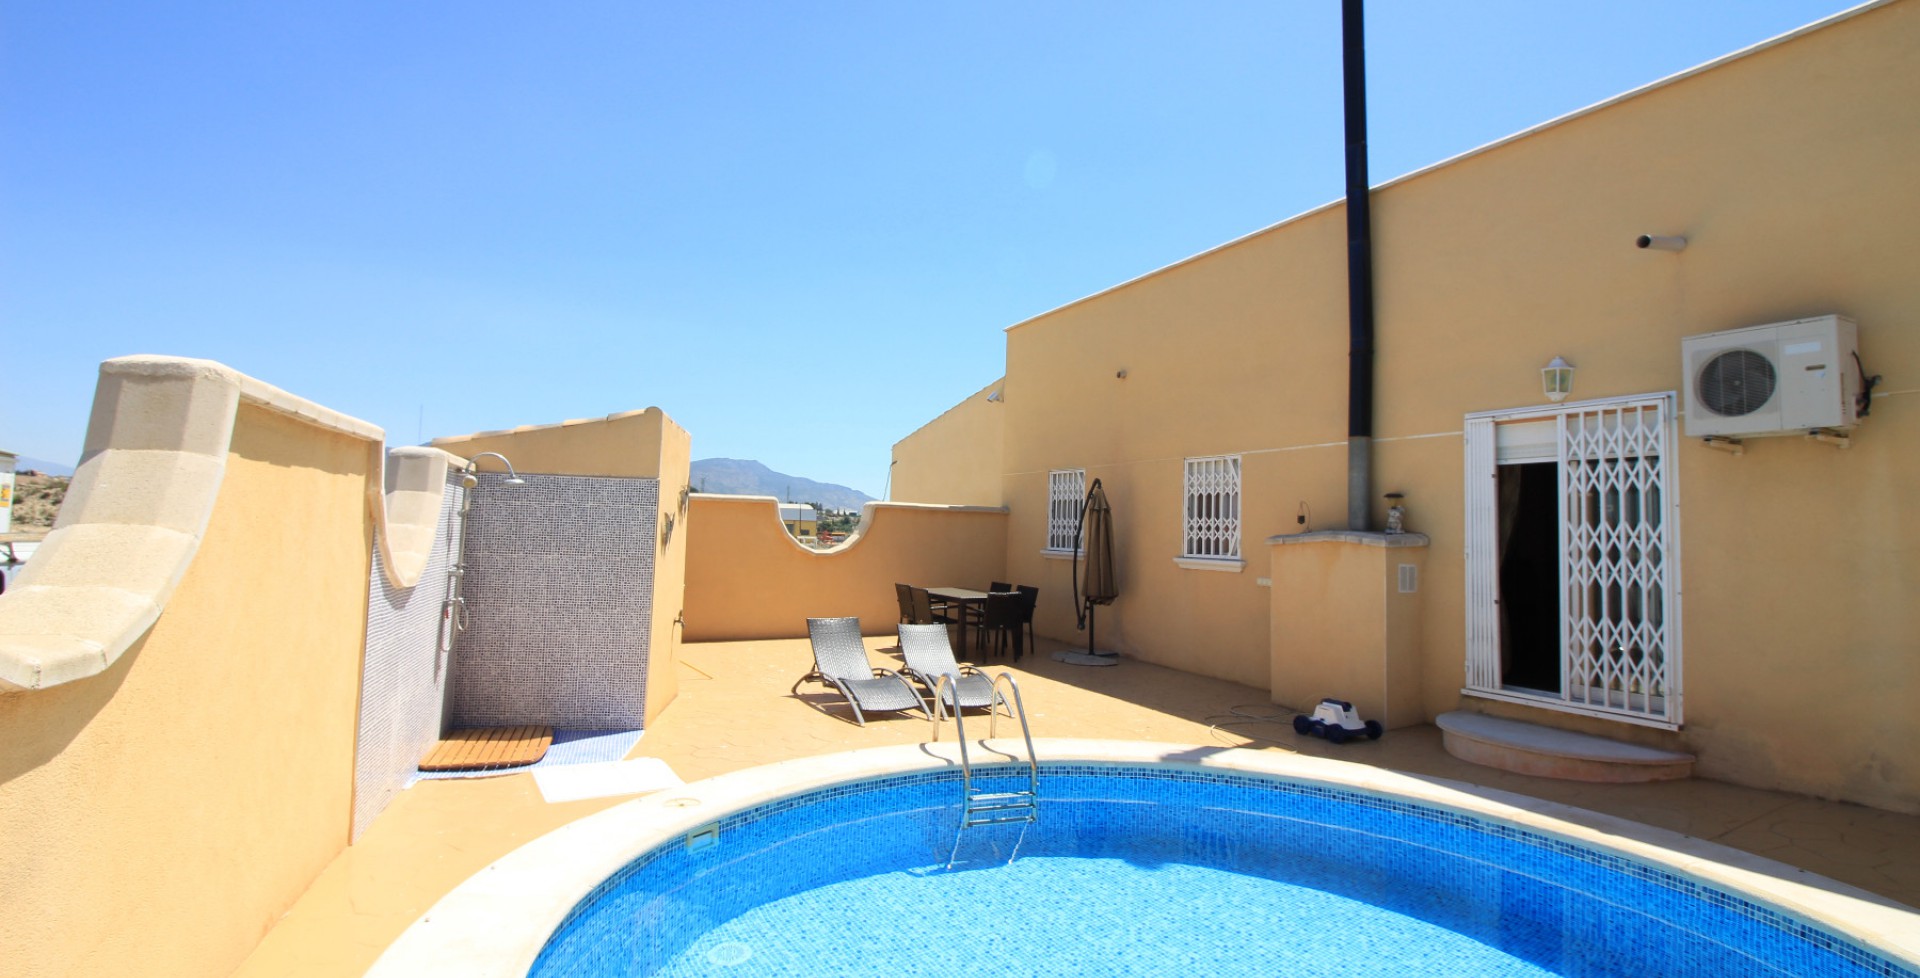 Great country home with  nice pool, Abarán, Murcia, Spain